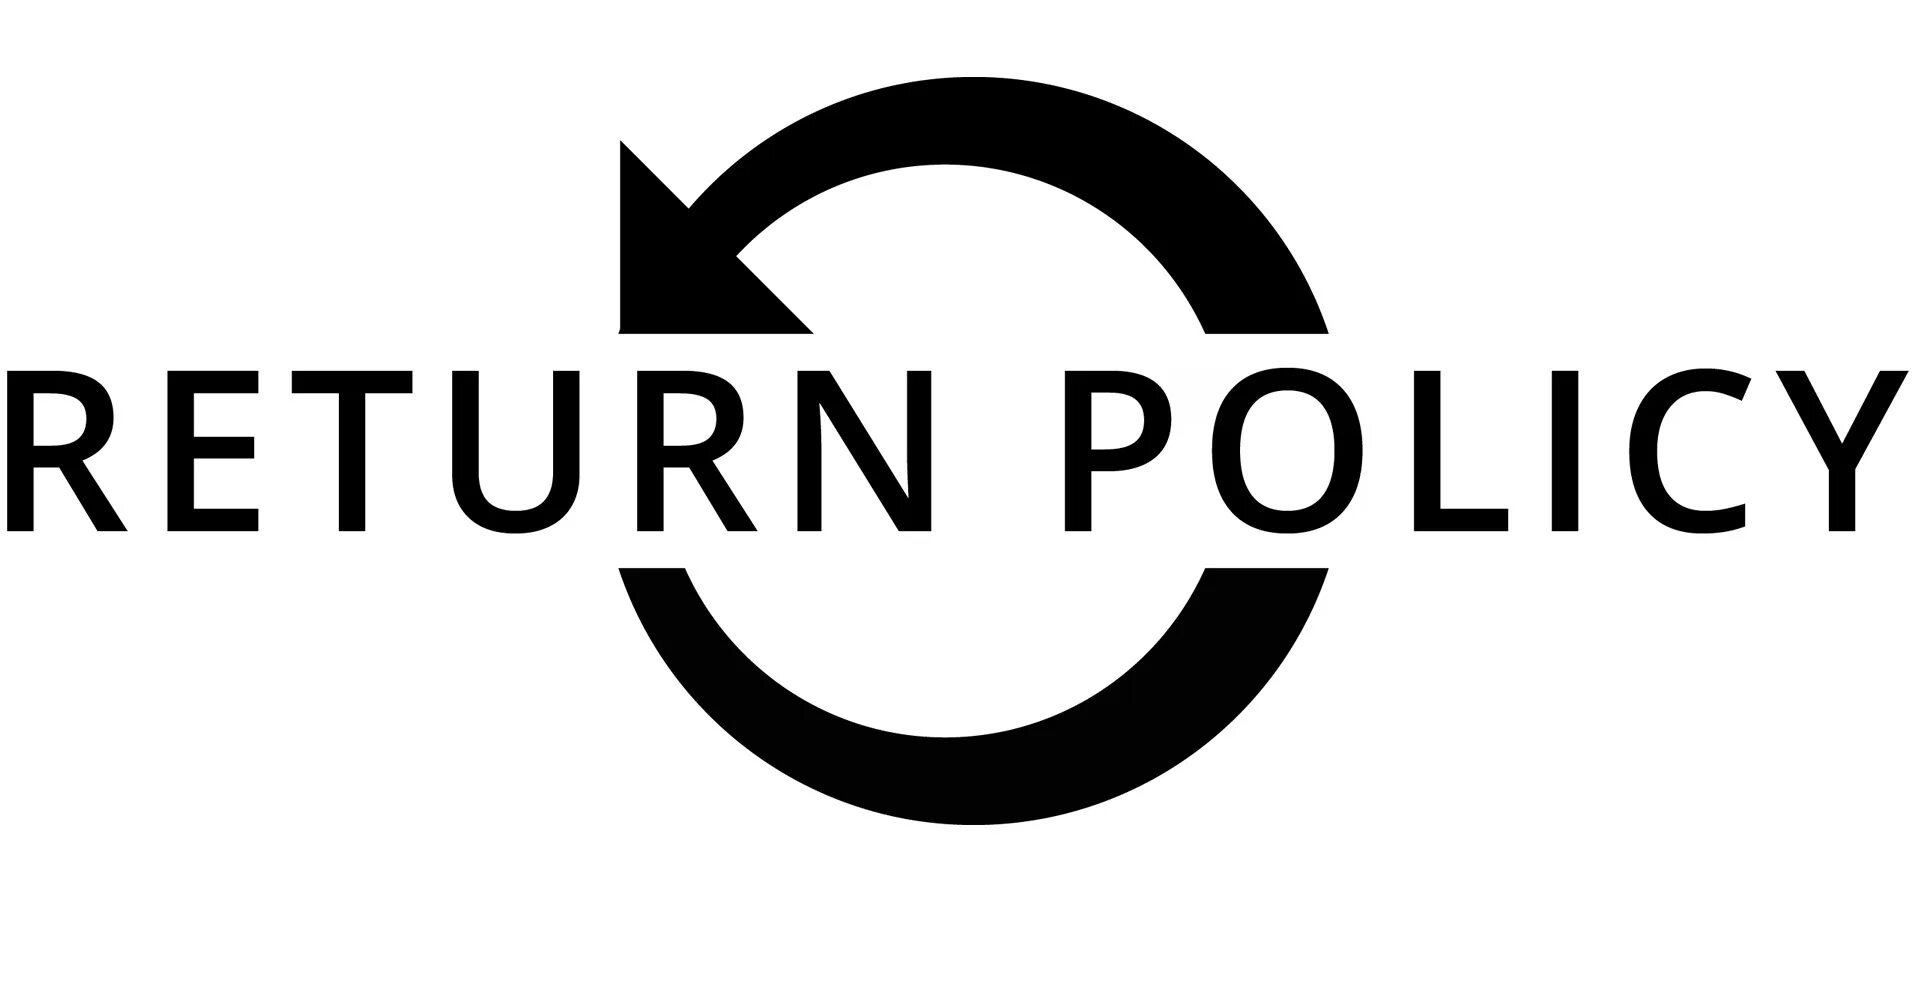 Return логотип. The Return. Значок возврата. Return Policy.